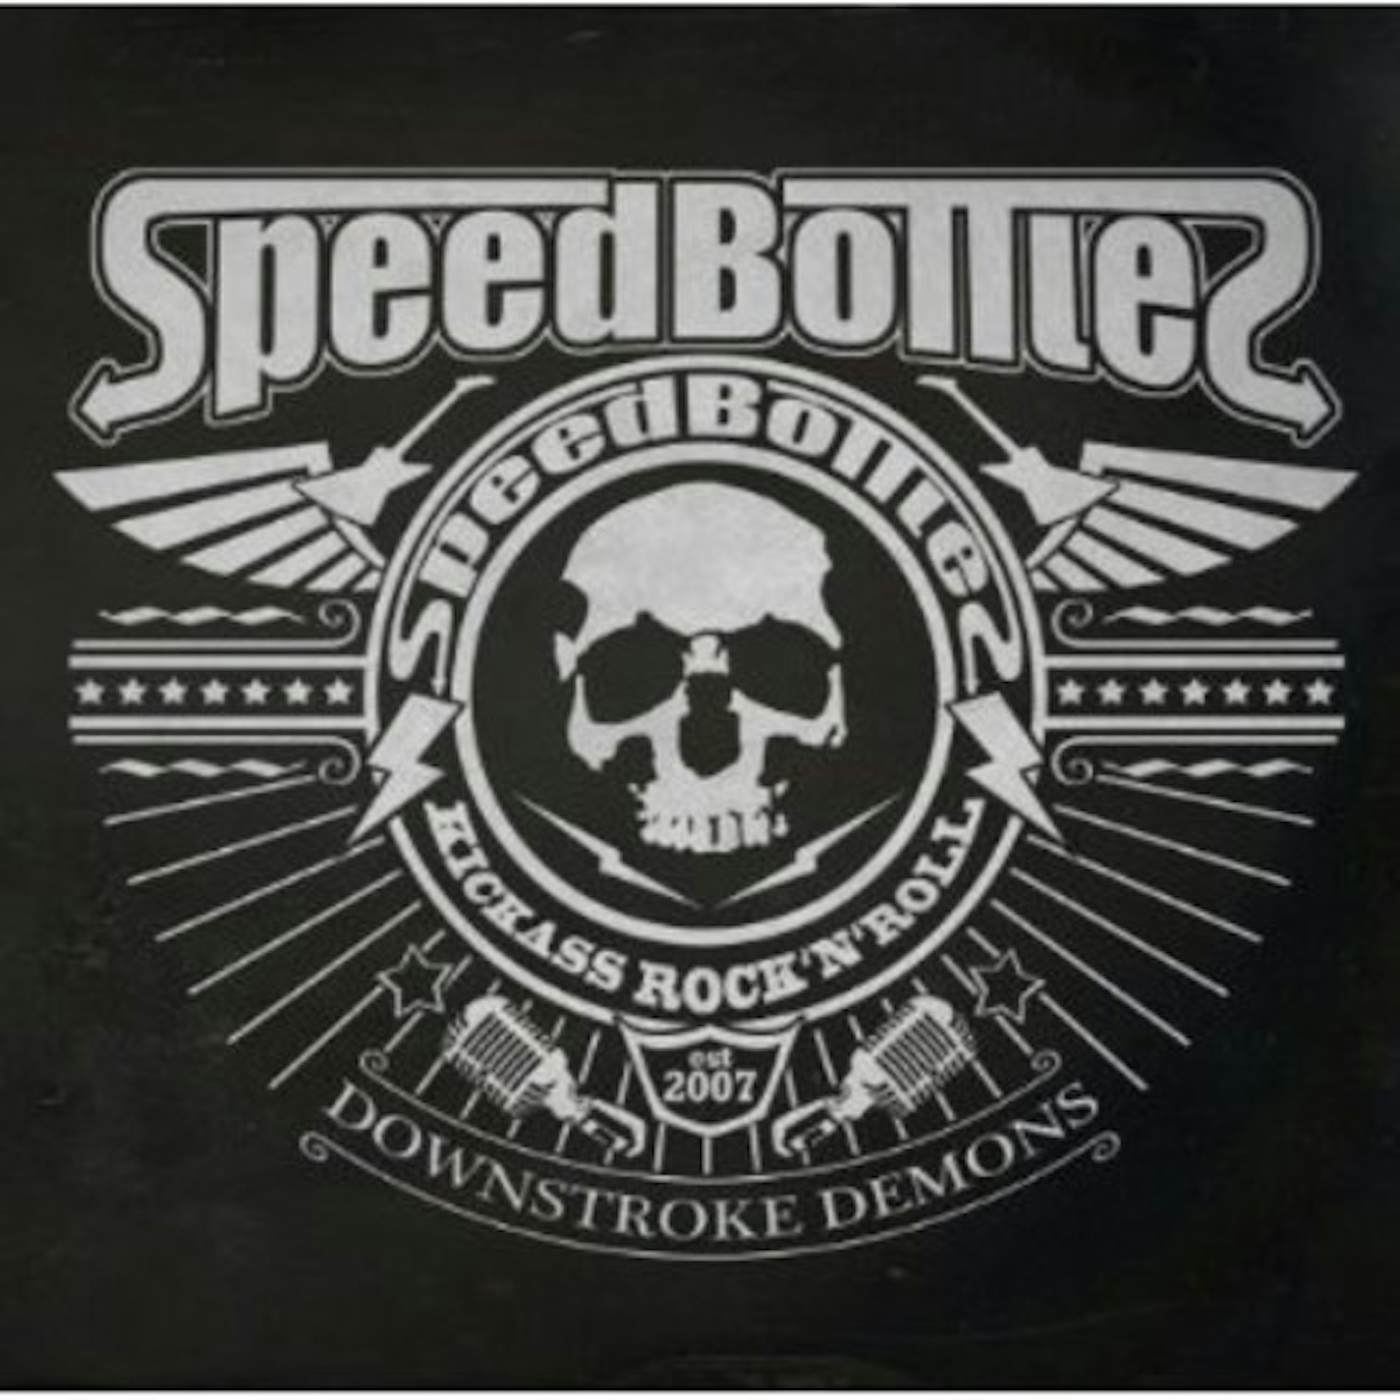 SpeedBottles DOWNSTROKE DEMONS CD